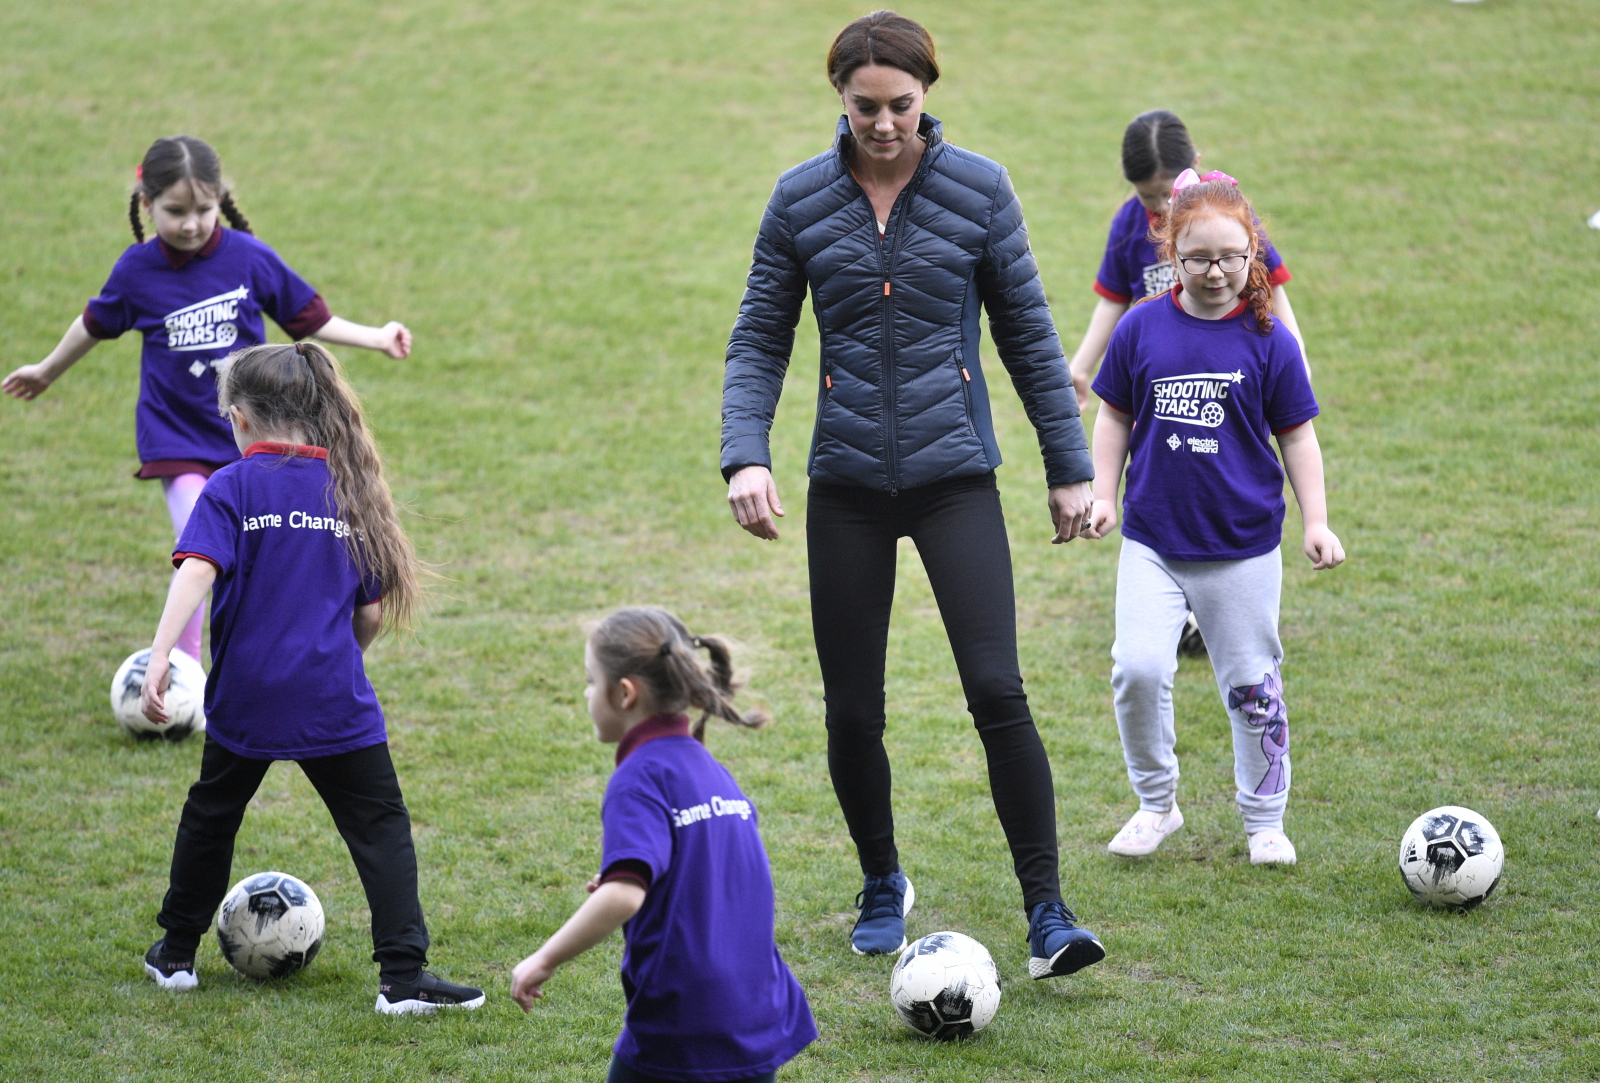 Księżna Kate i młode piłkarki w Irlandii Północnej. Fot. PAP/EPA/NEIL HALL